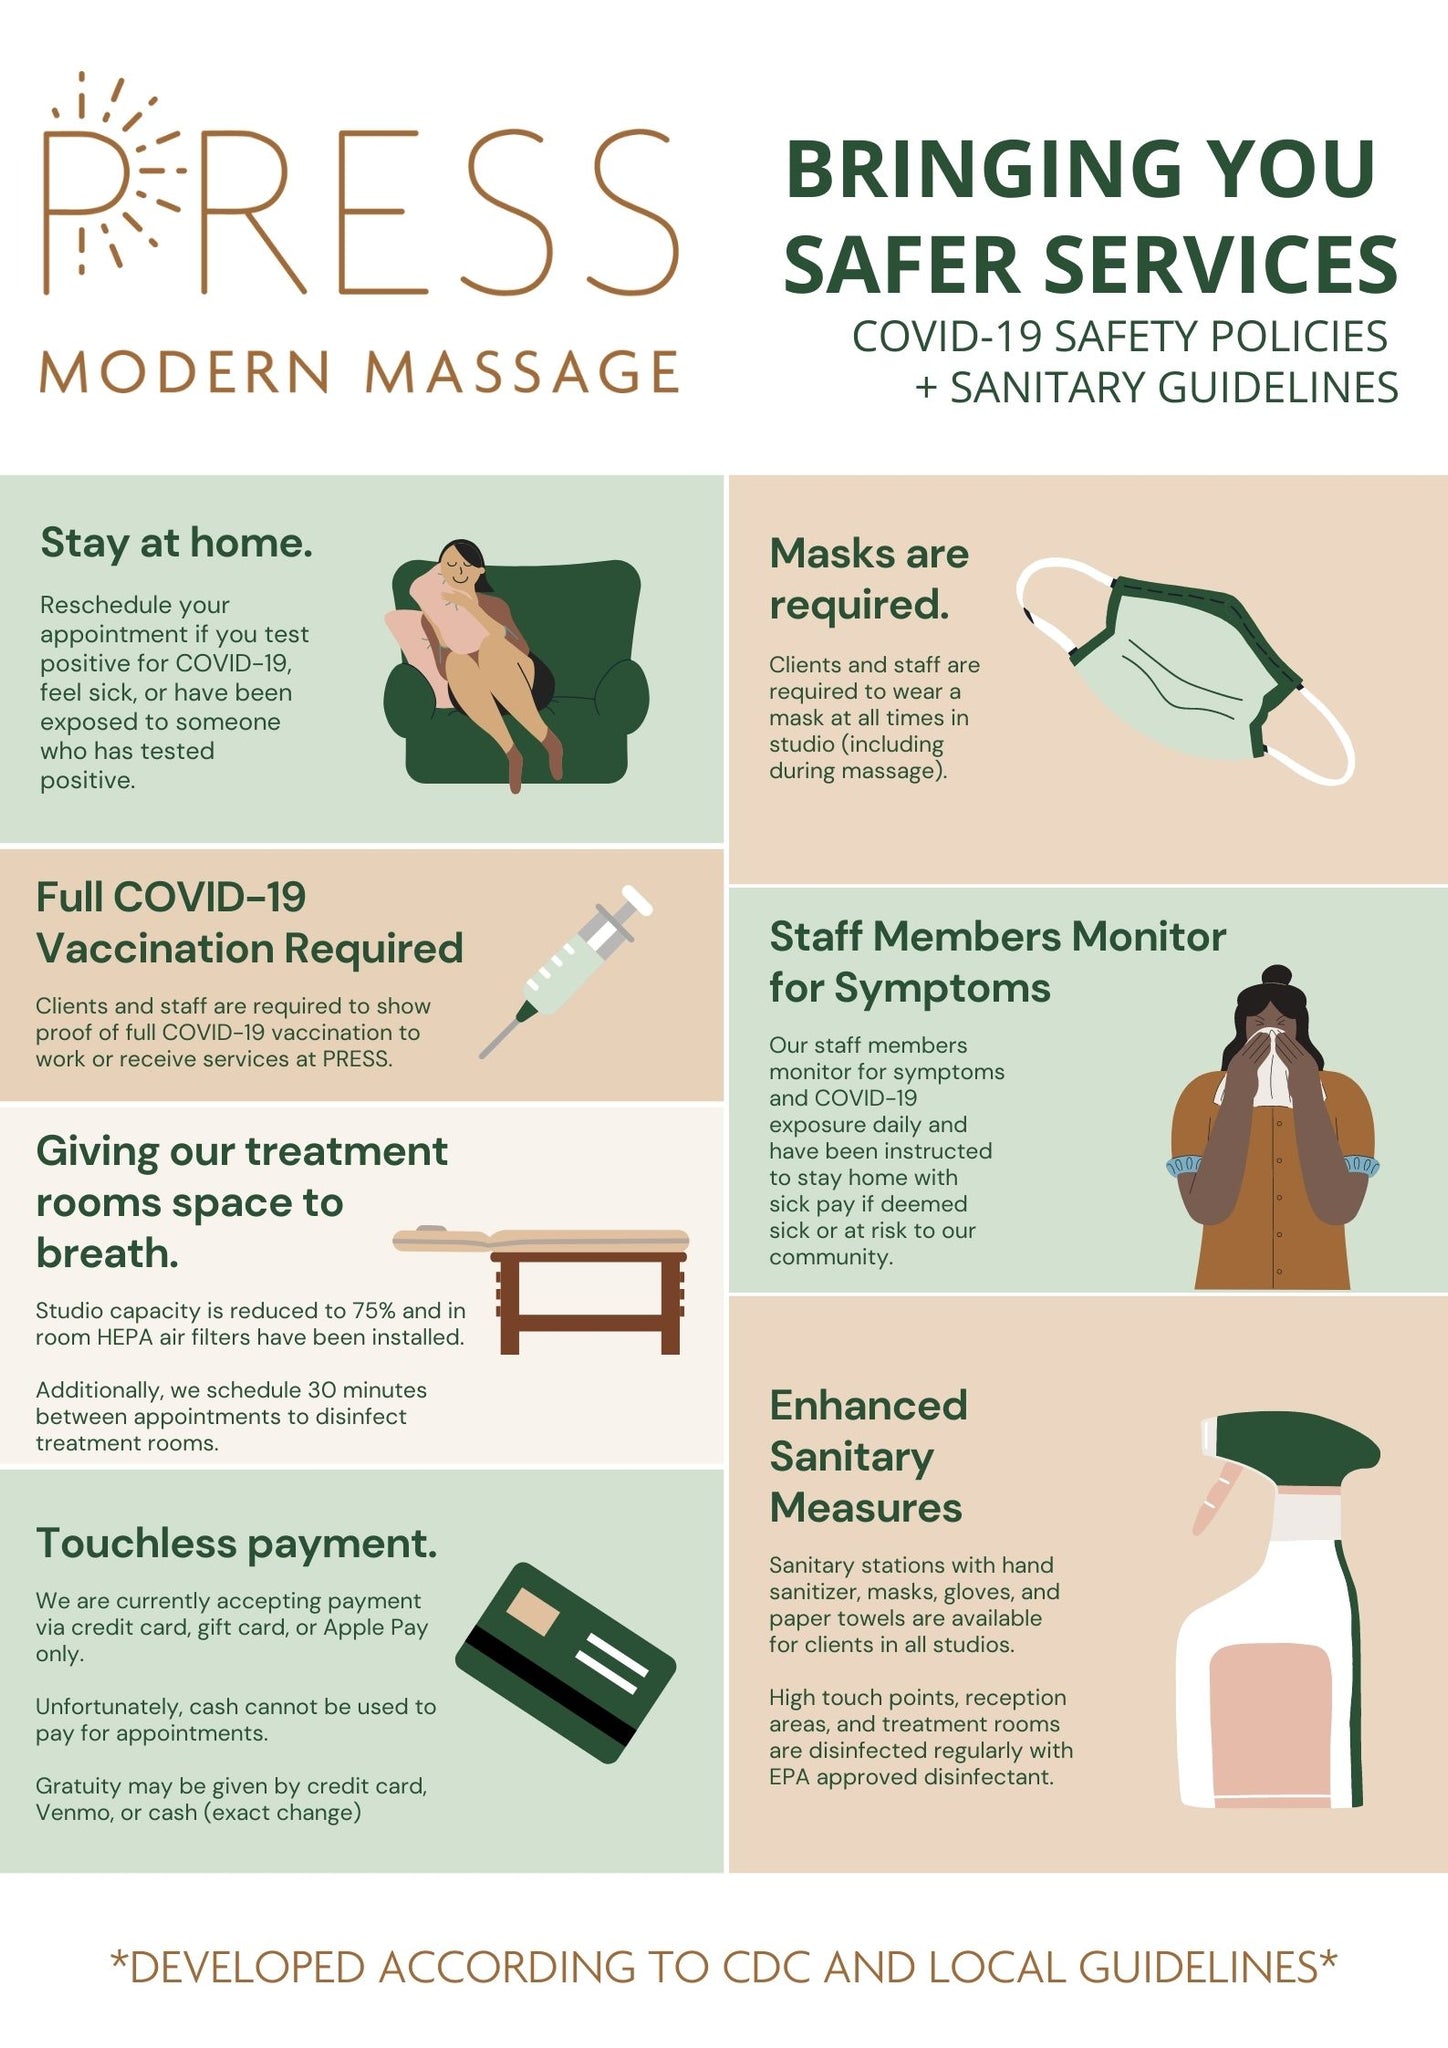 COVID-19 Safety Policies at PRESS Modern Massage